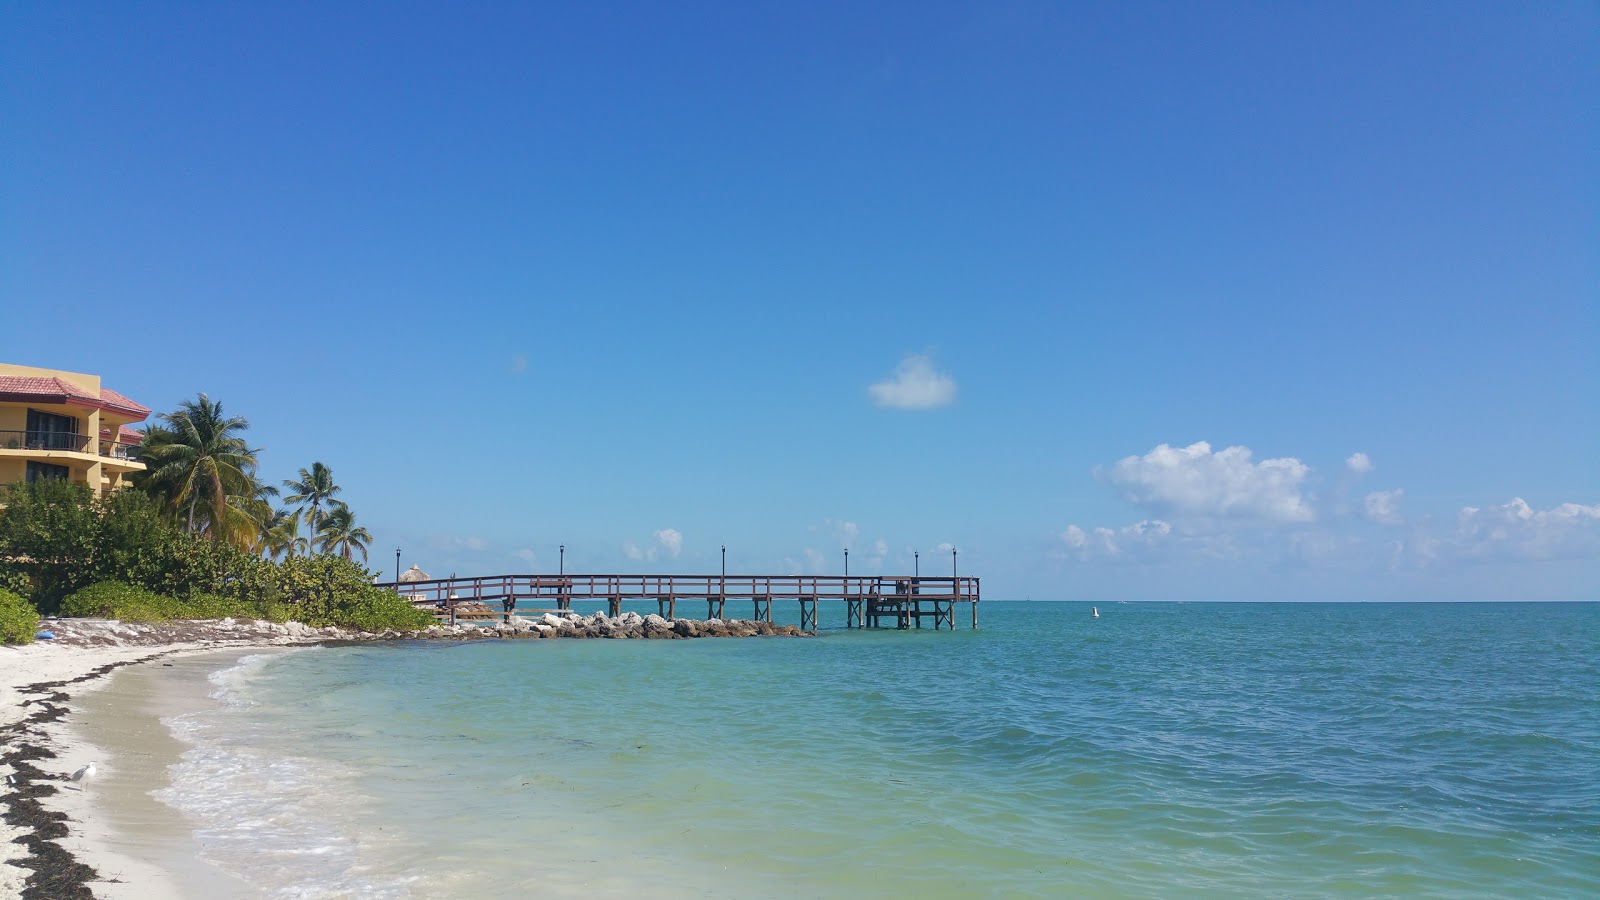 Foto af Key Colony beach delvist hotelområde